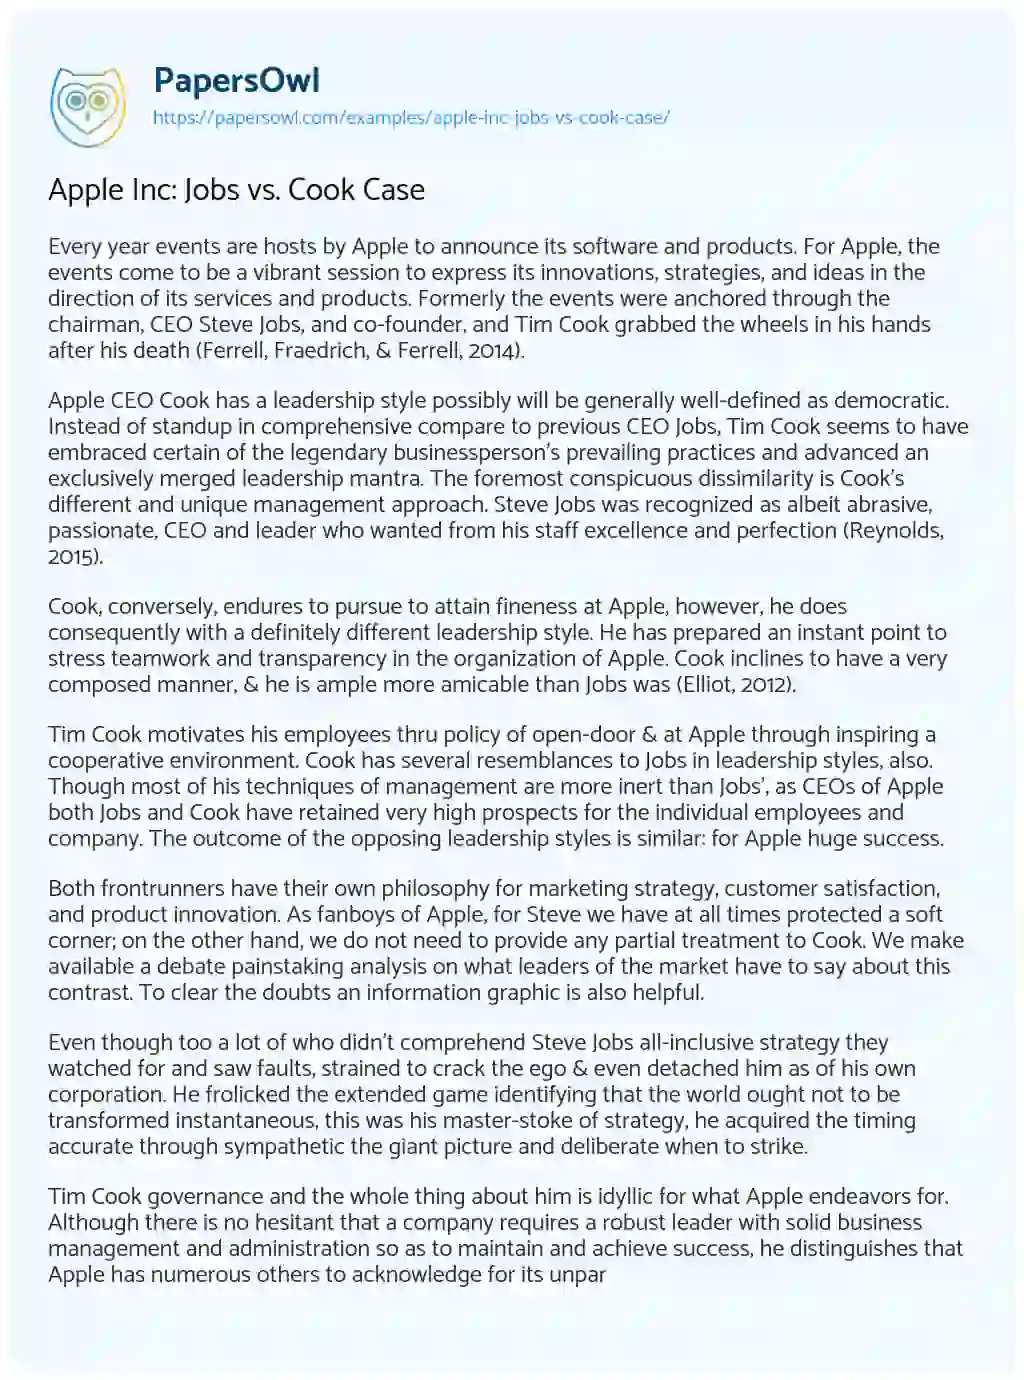 Apple Inc: Jobs Vs. Cook Case essay